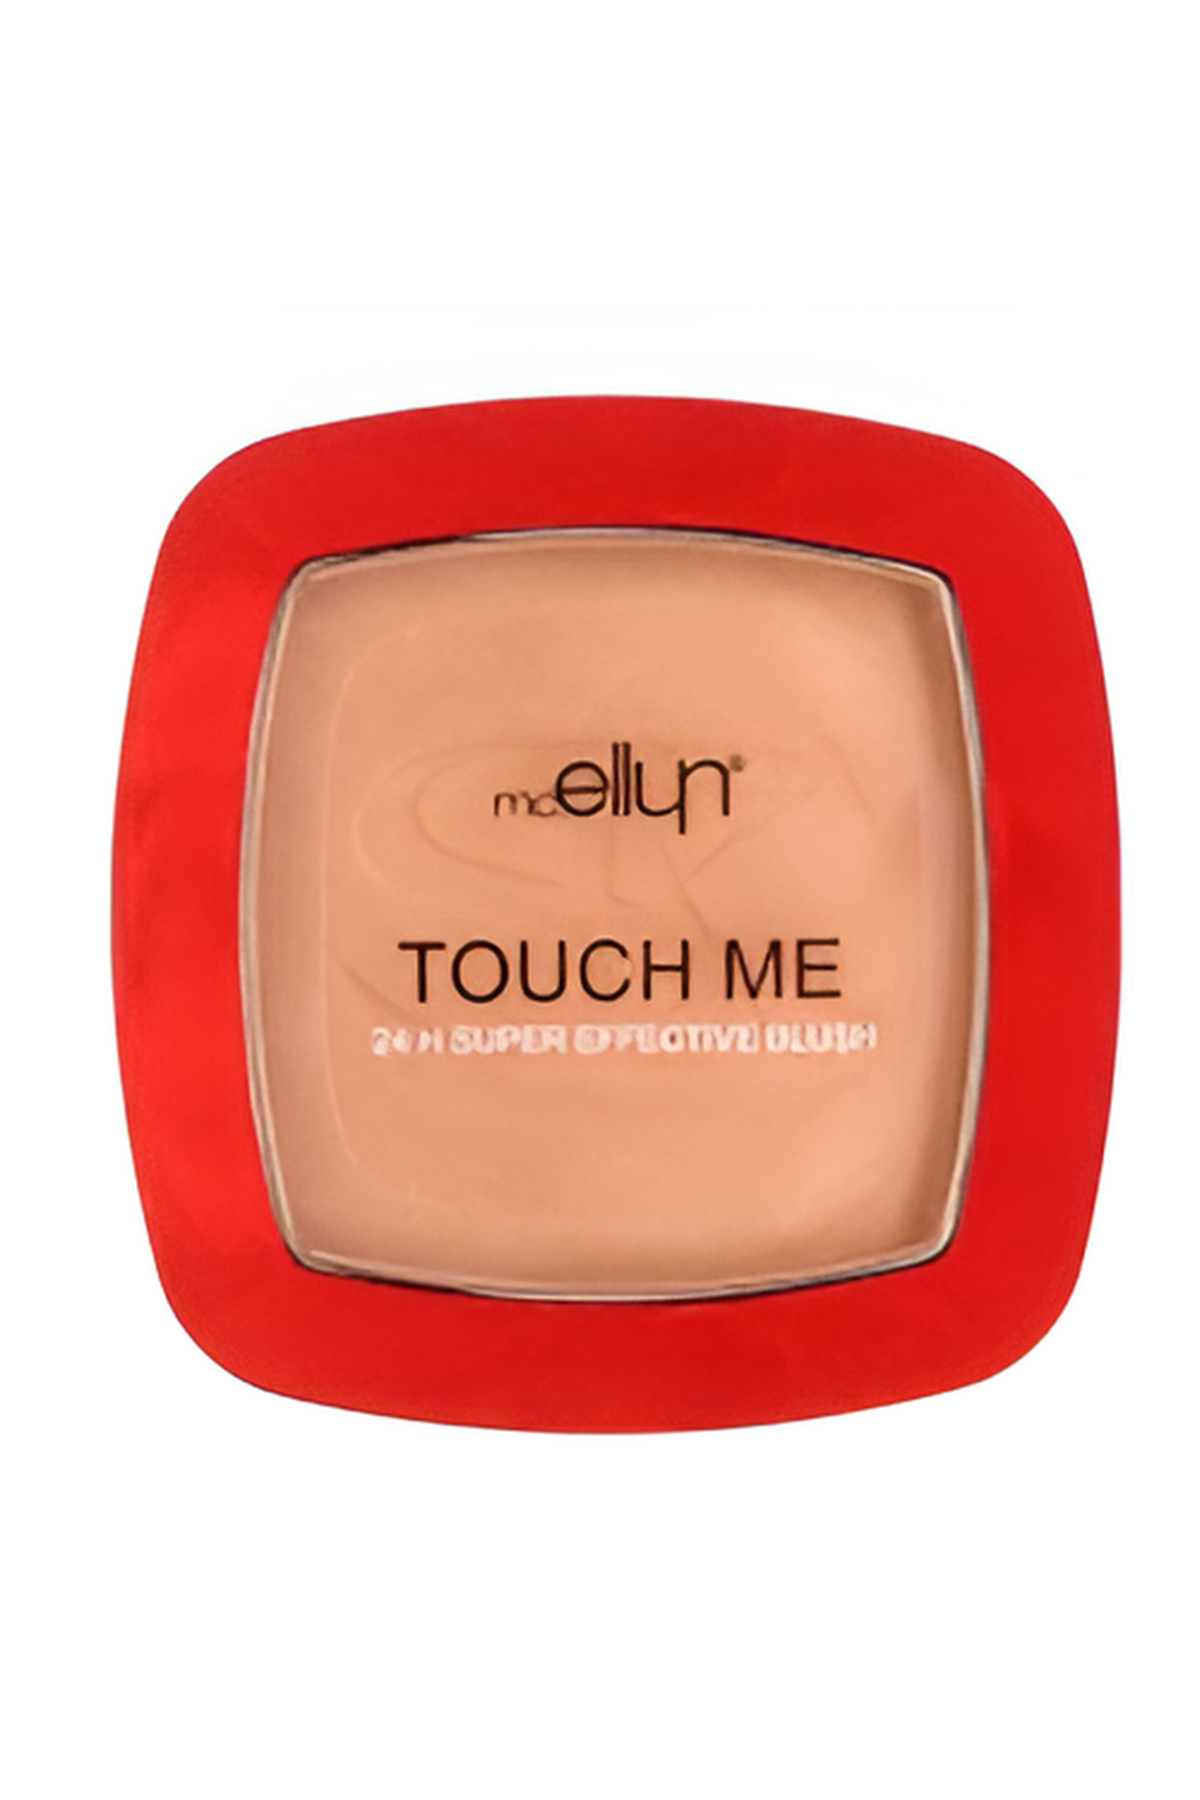 Mcellyn Touch Me 24h Super Effective Blush Allık No:3